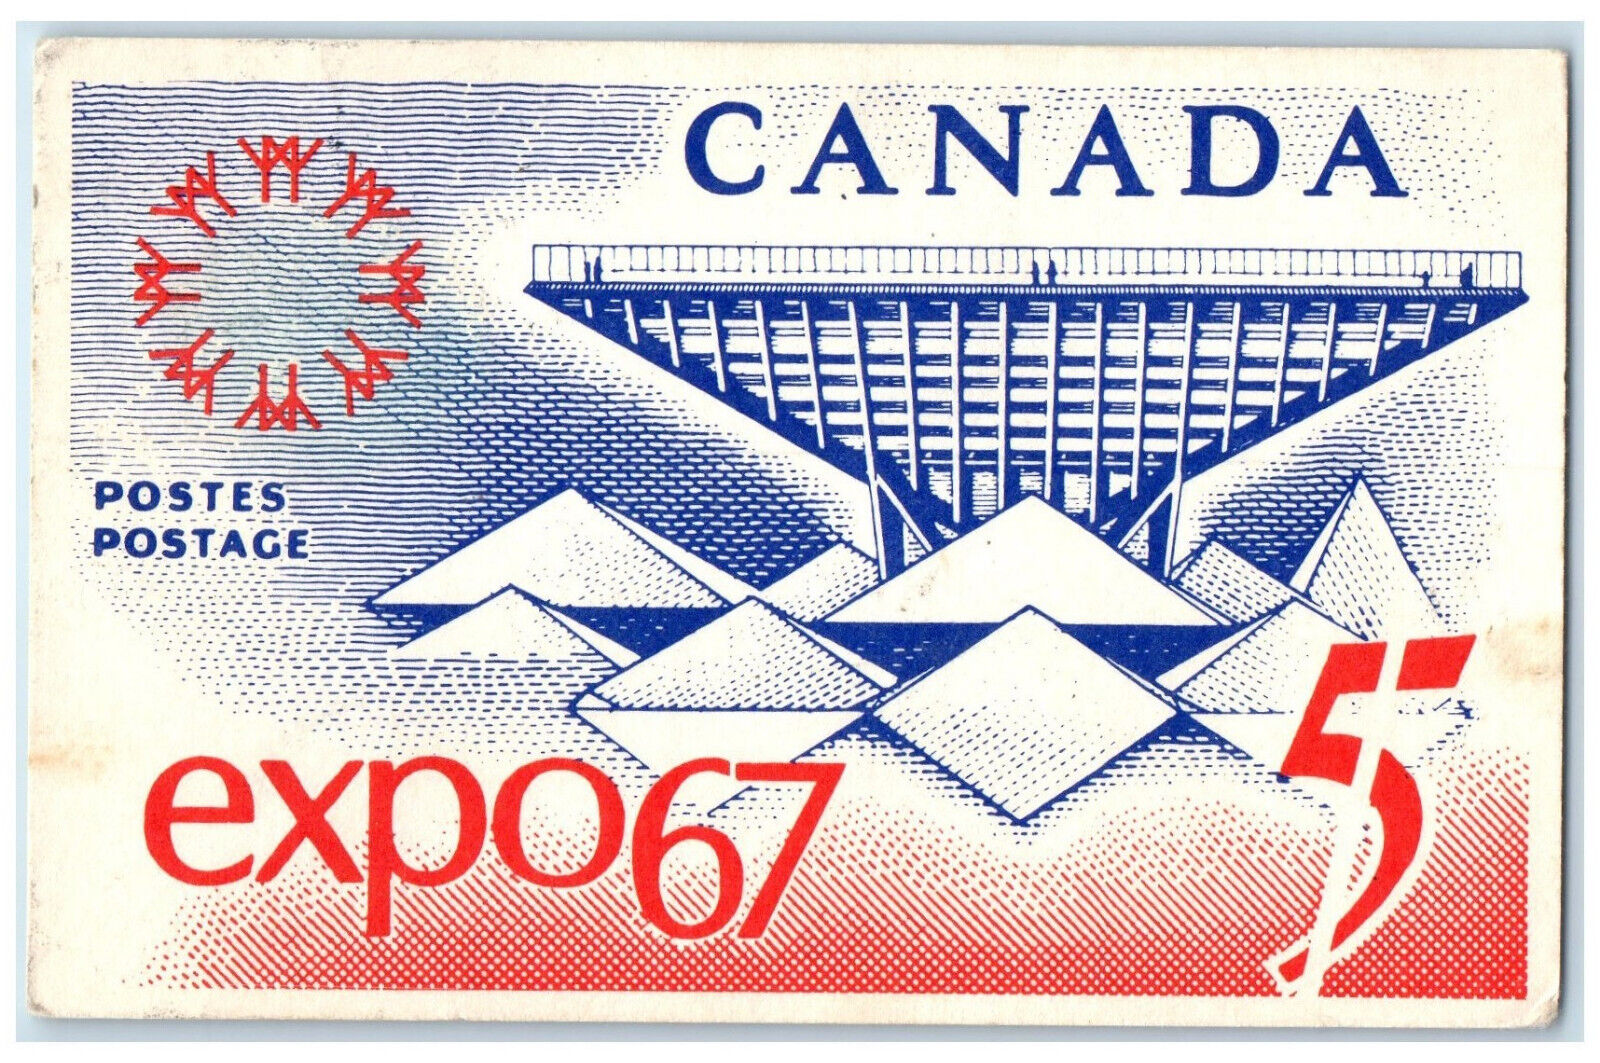 1967 Queen's Printer Ottawa Ontario Canada Expo 67 APO Vintage Postcard